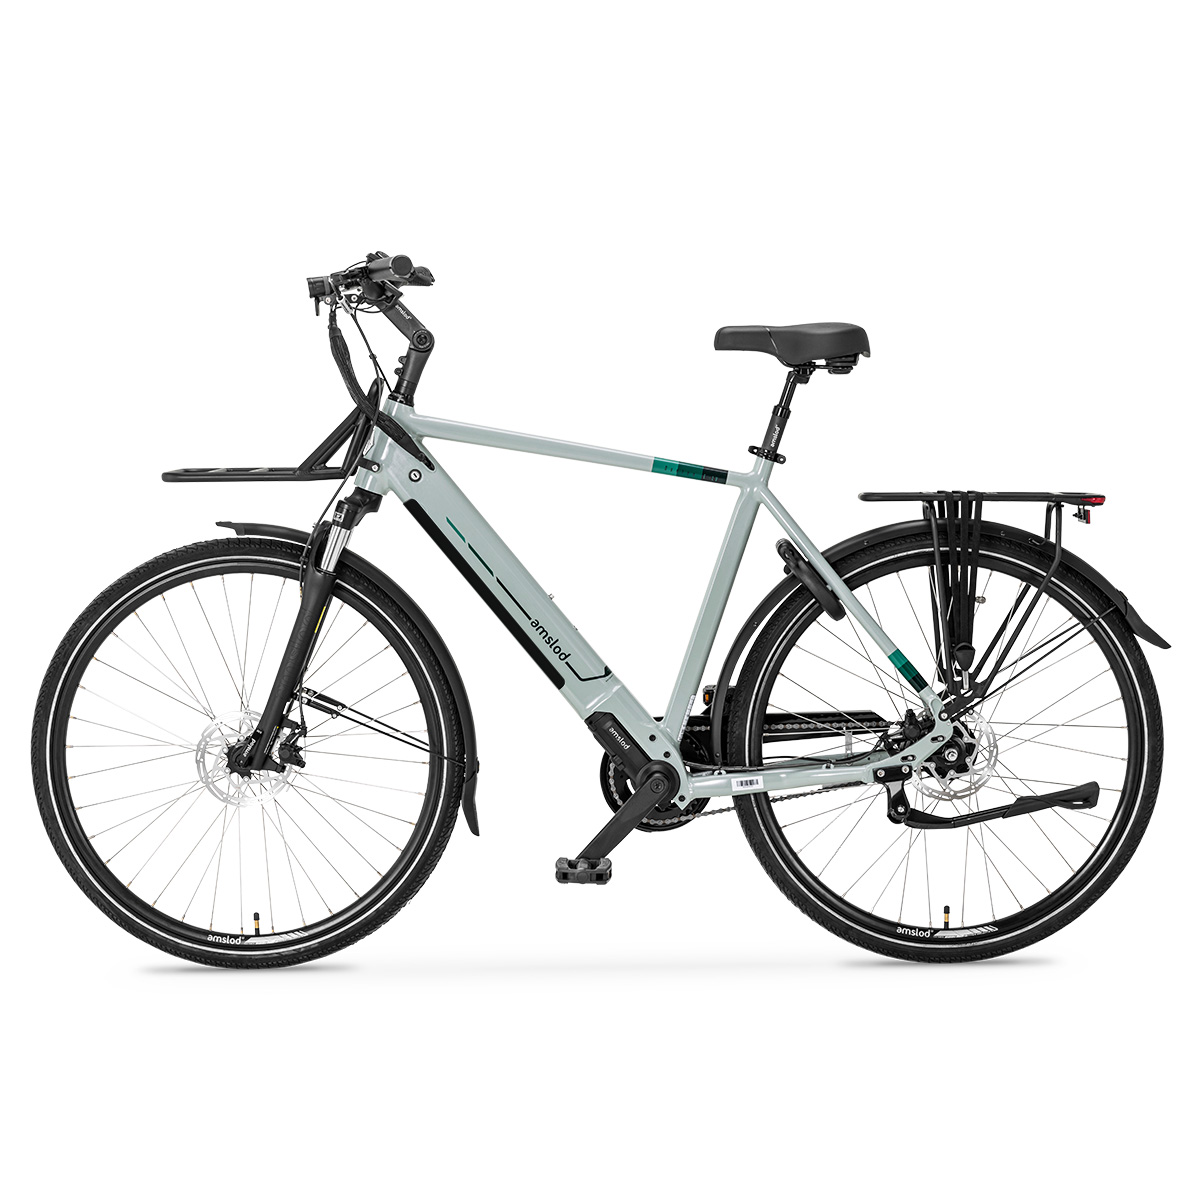 Amslod-elektrische-fiets-denton-stadsfiets-elektrisch-verende-voorvork4